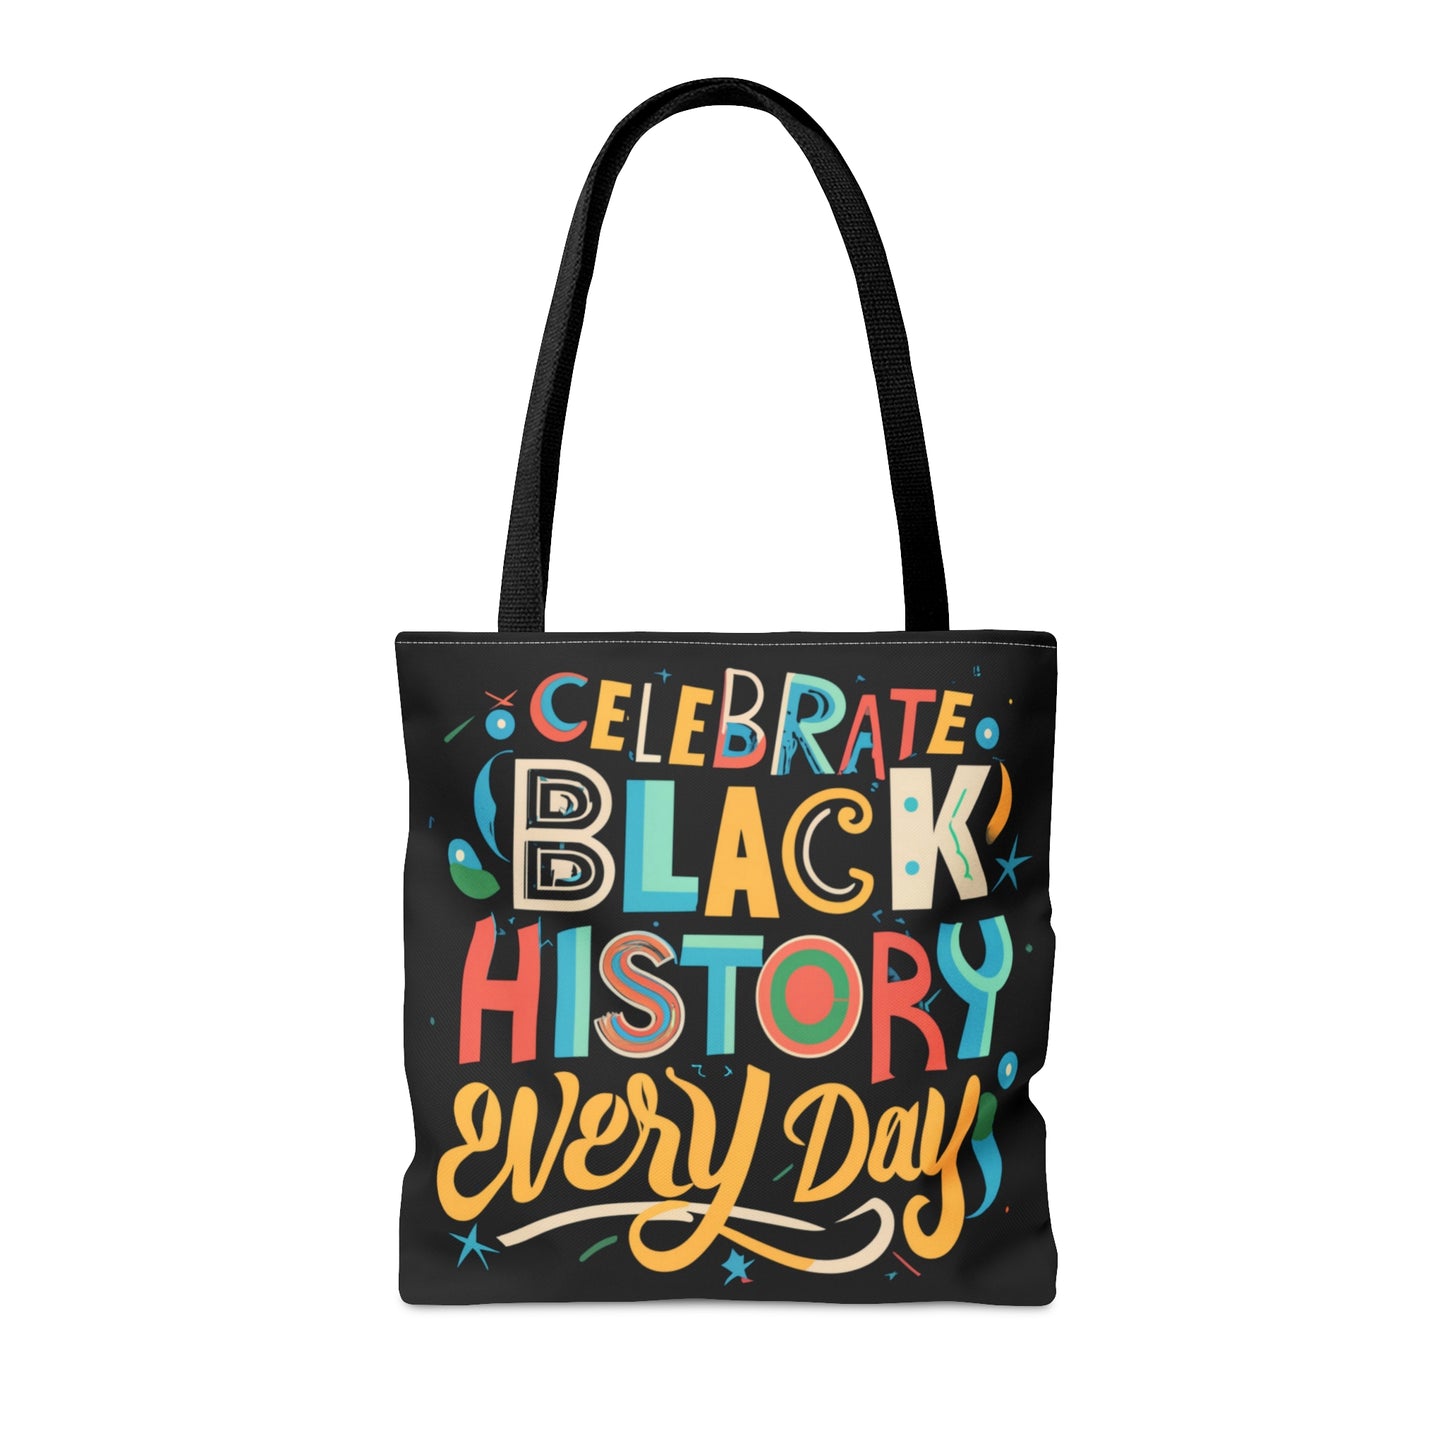 "Celebrate Black History Everyday" -- Tote Bag